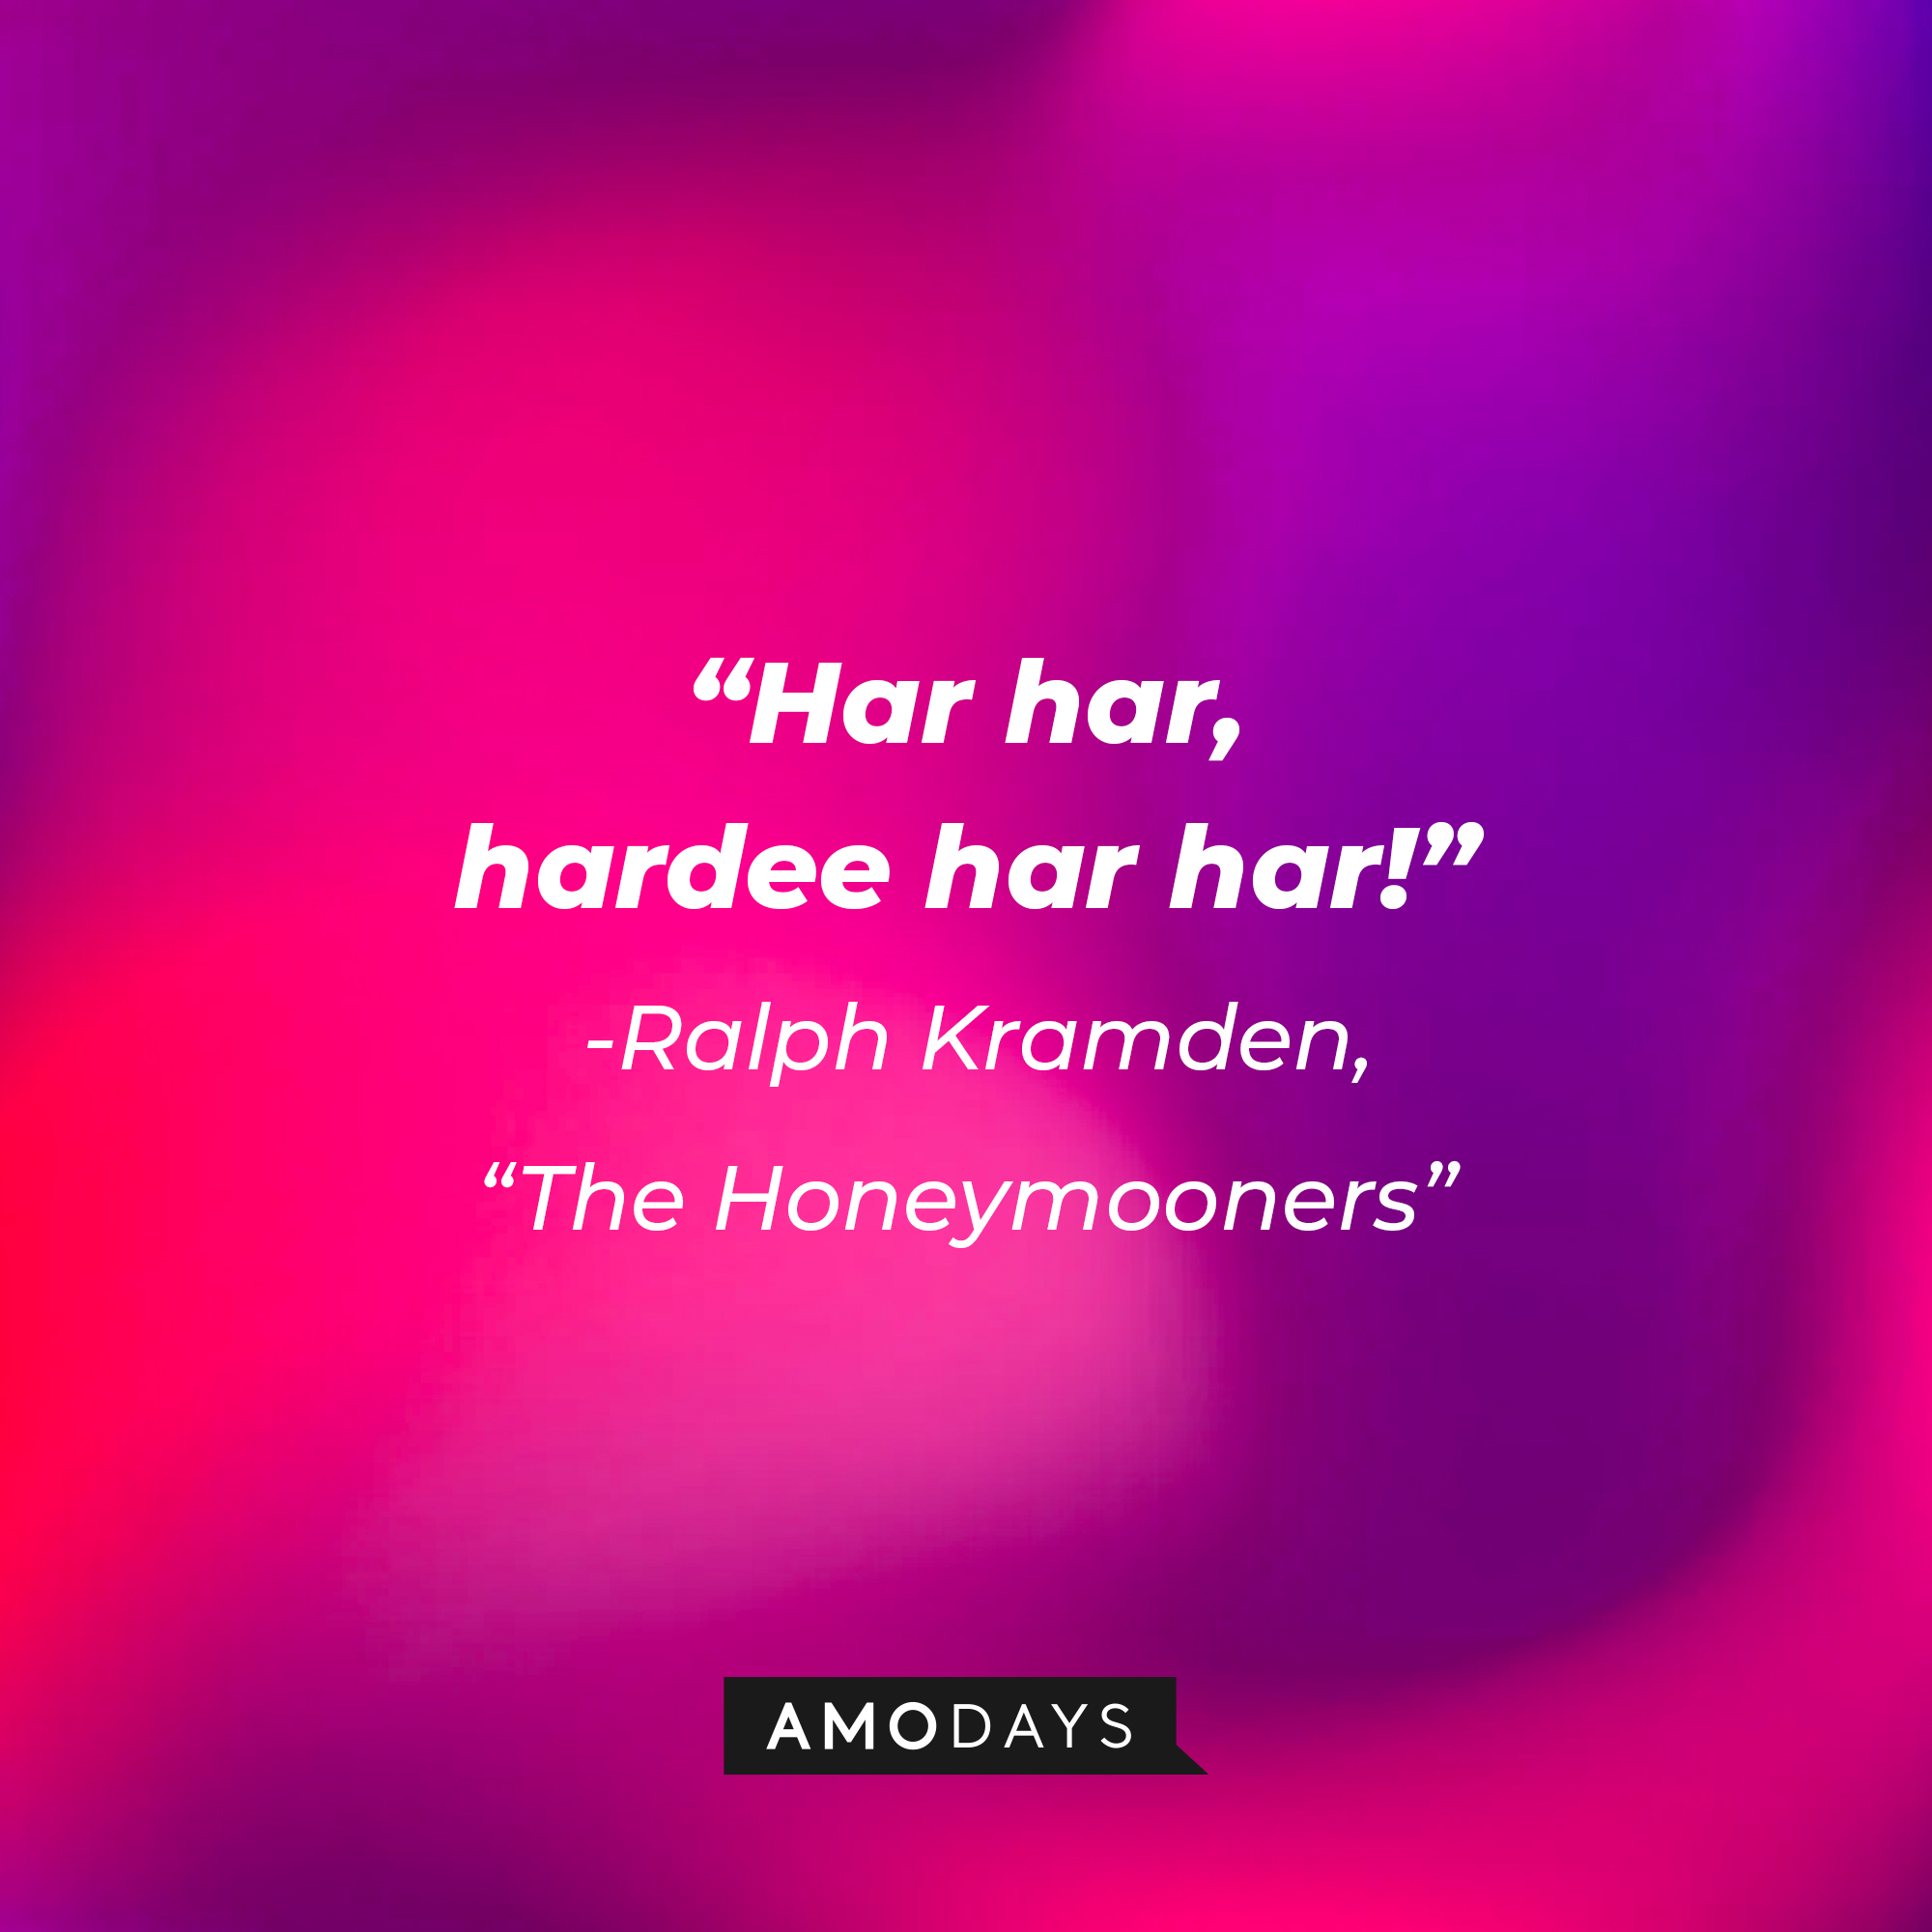 A quote from "The Honeymooners" star Ralph Kramden: "Har har, hardee har har!" | Source: AmoDays